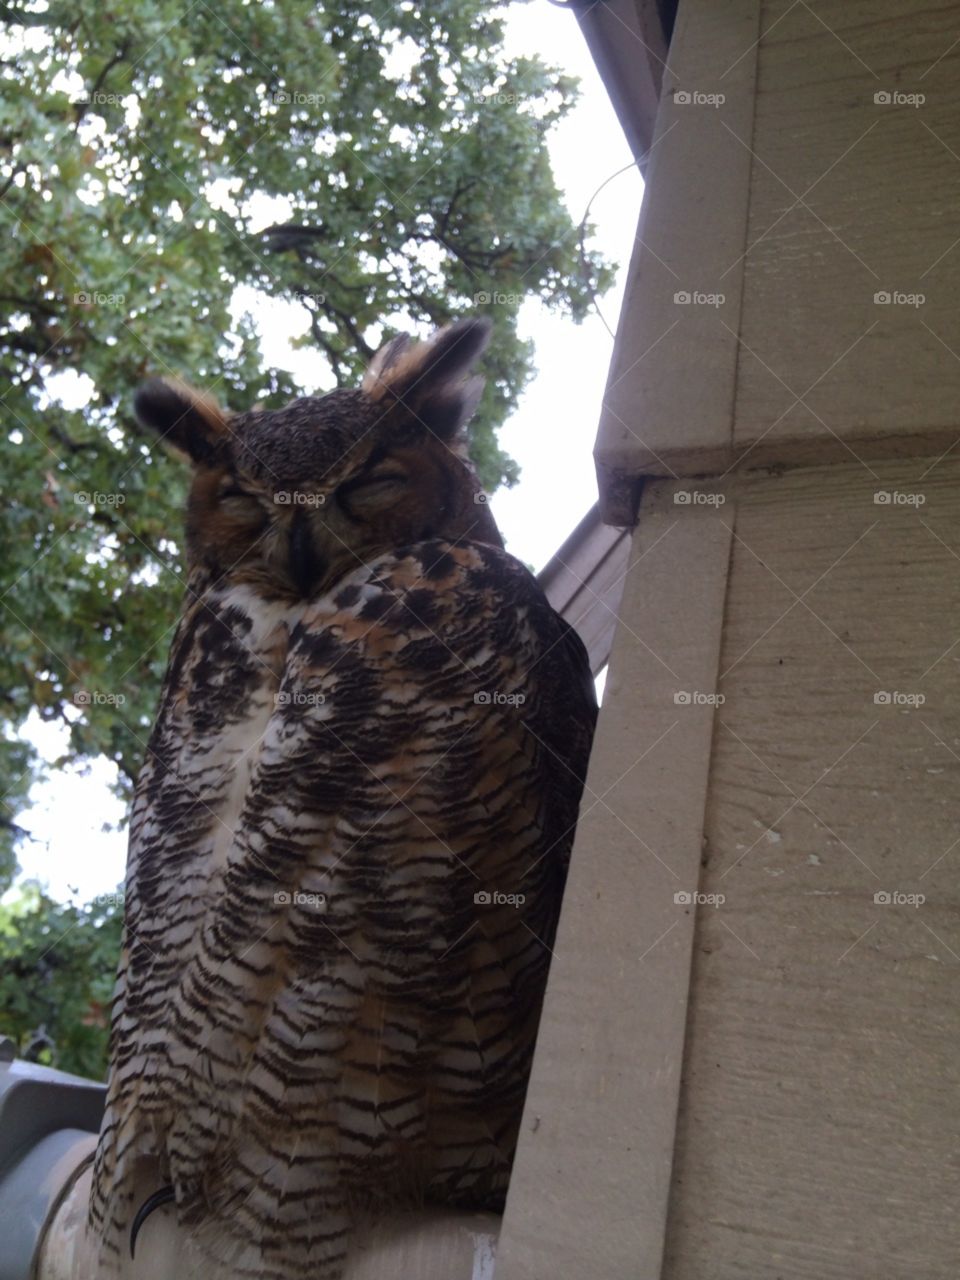 Owl on a ledge, part three.